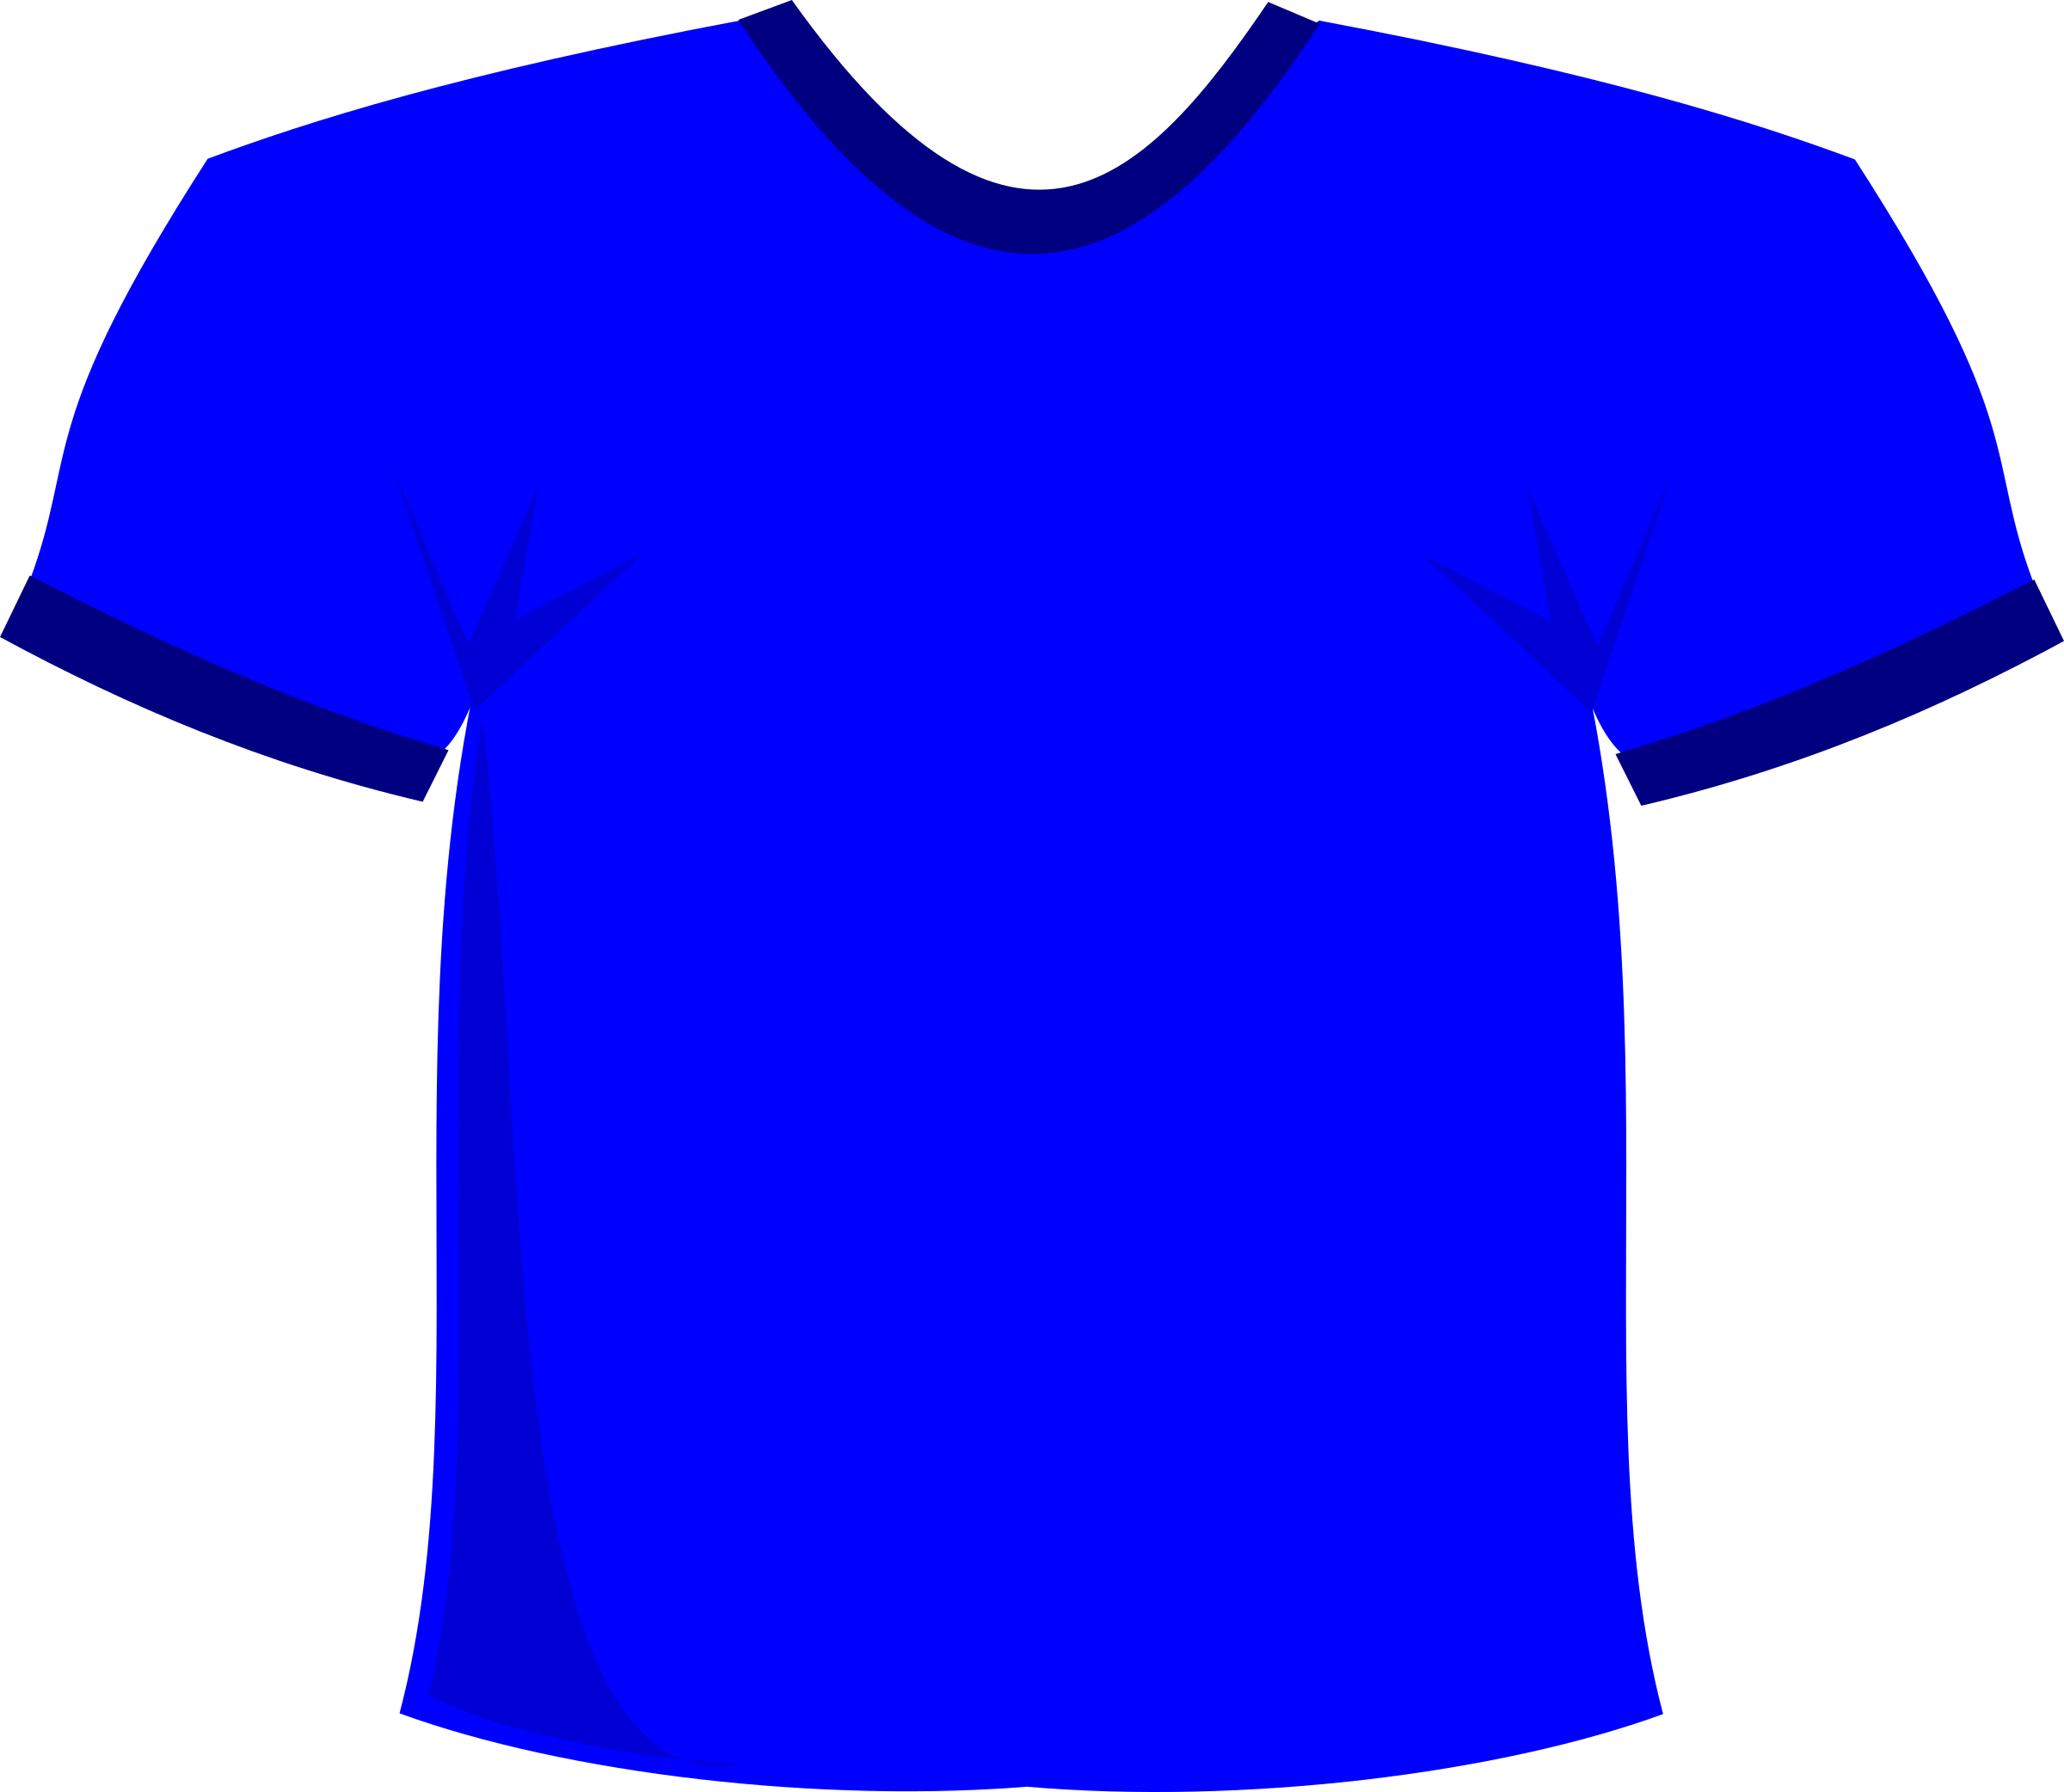 Big Image (Png) - Blue Tshirt, Transparent background PNG HD thumbnail